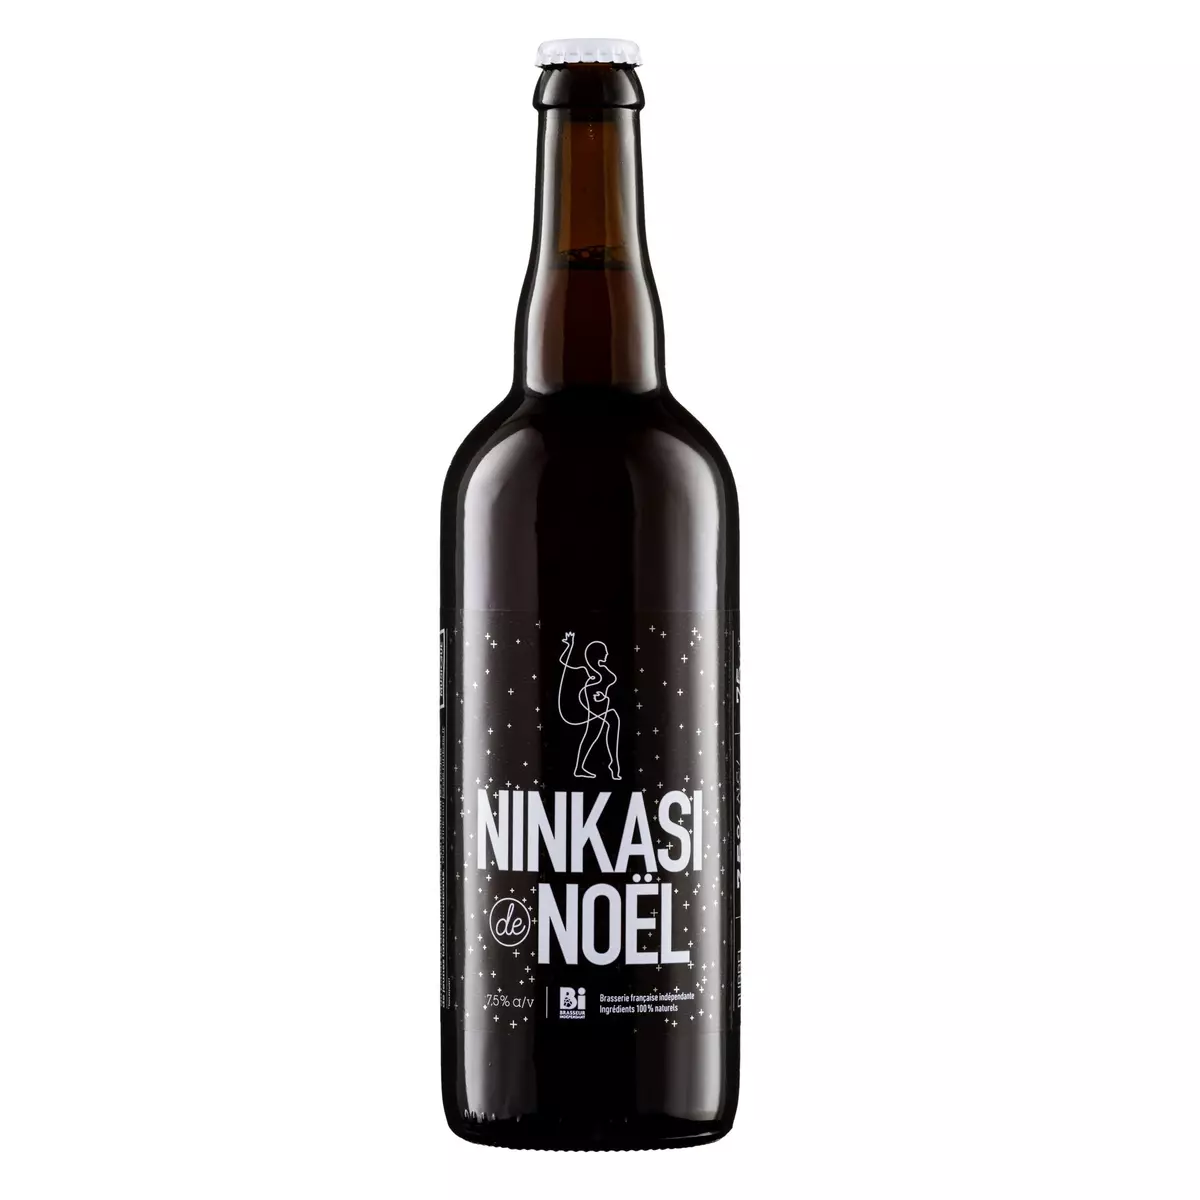 NINKASI Bière de Noël 7.5% 75cl